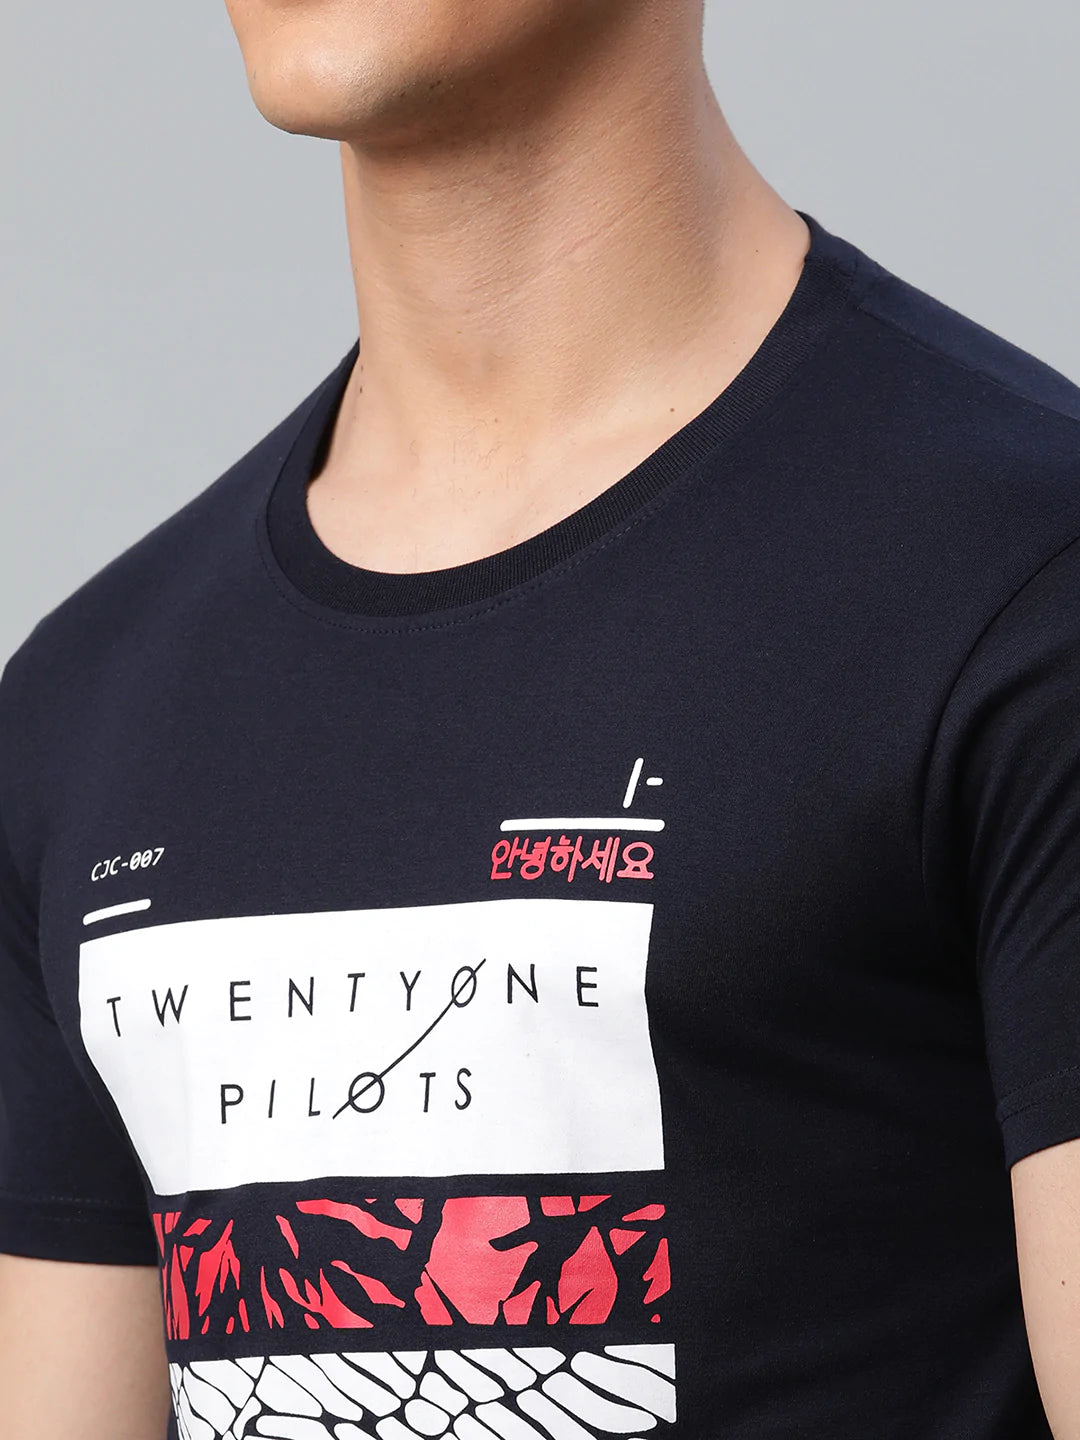 Men Navy Blue Typography Printed Slim Fit T-shirt